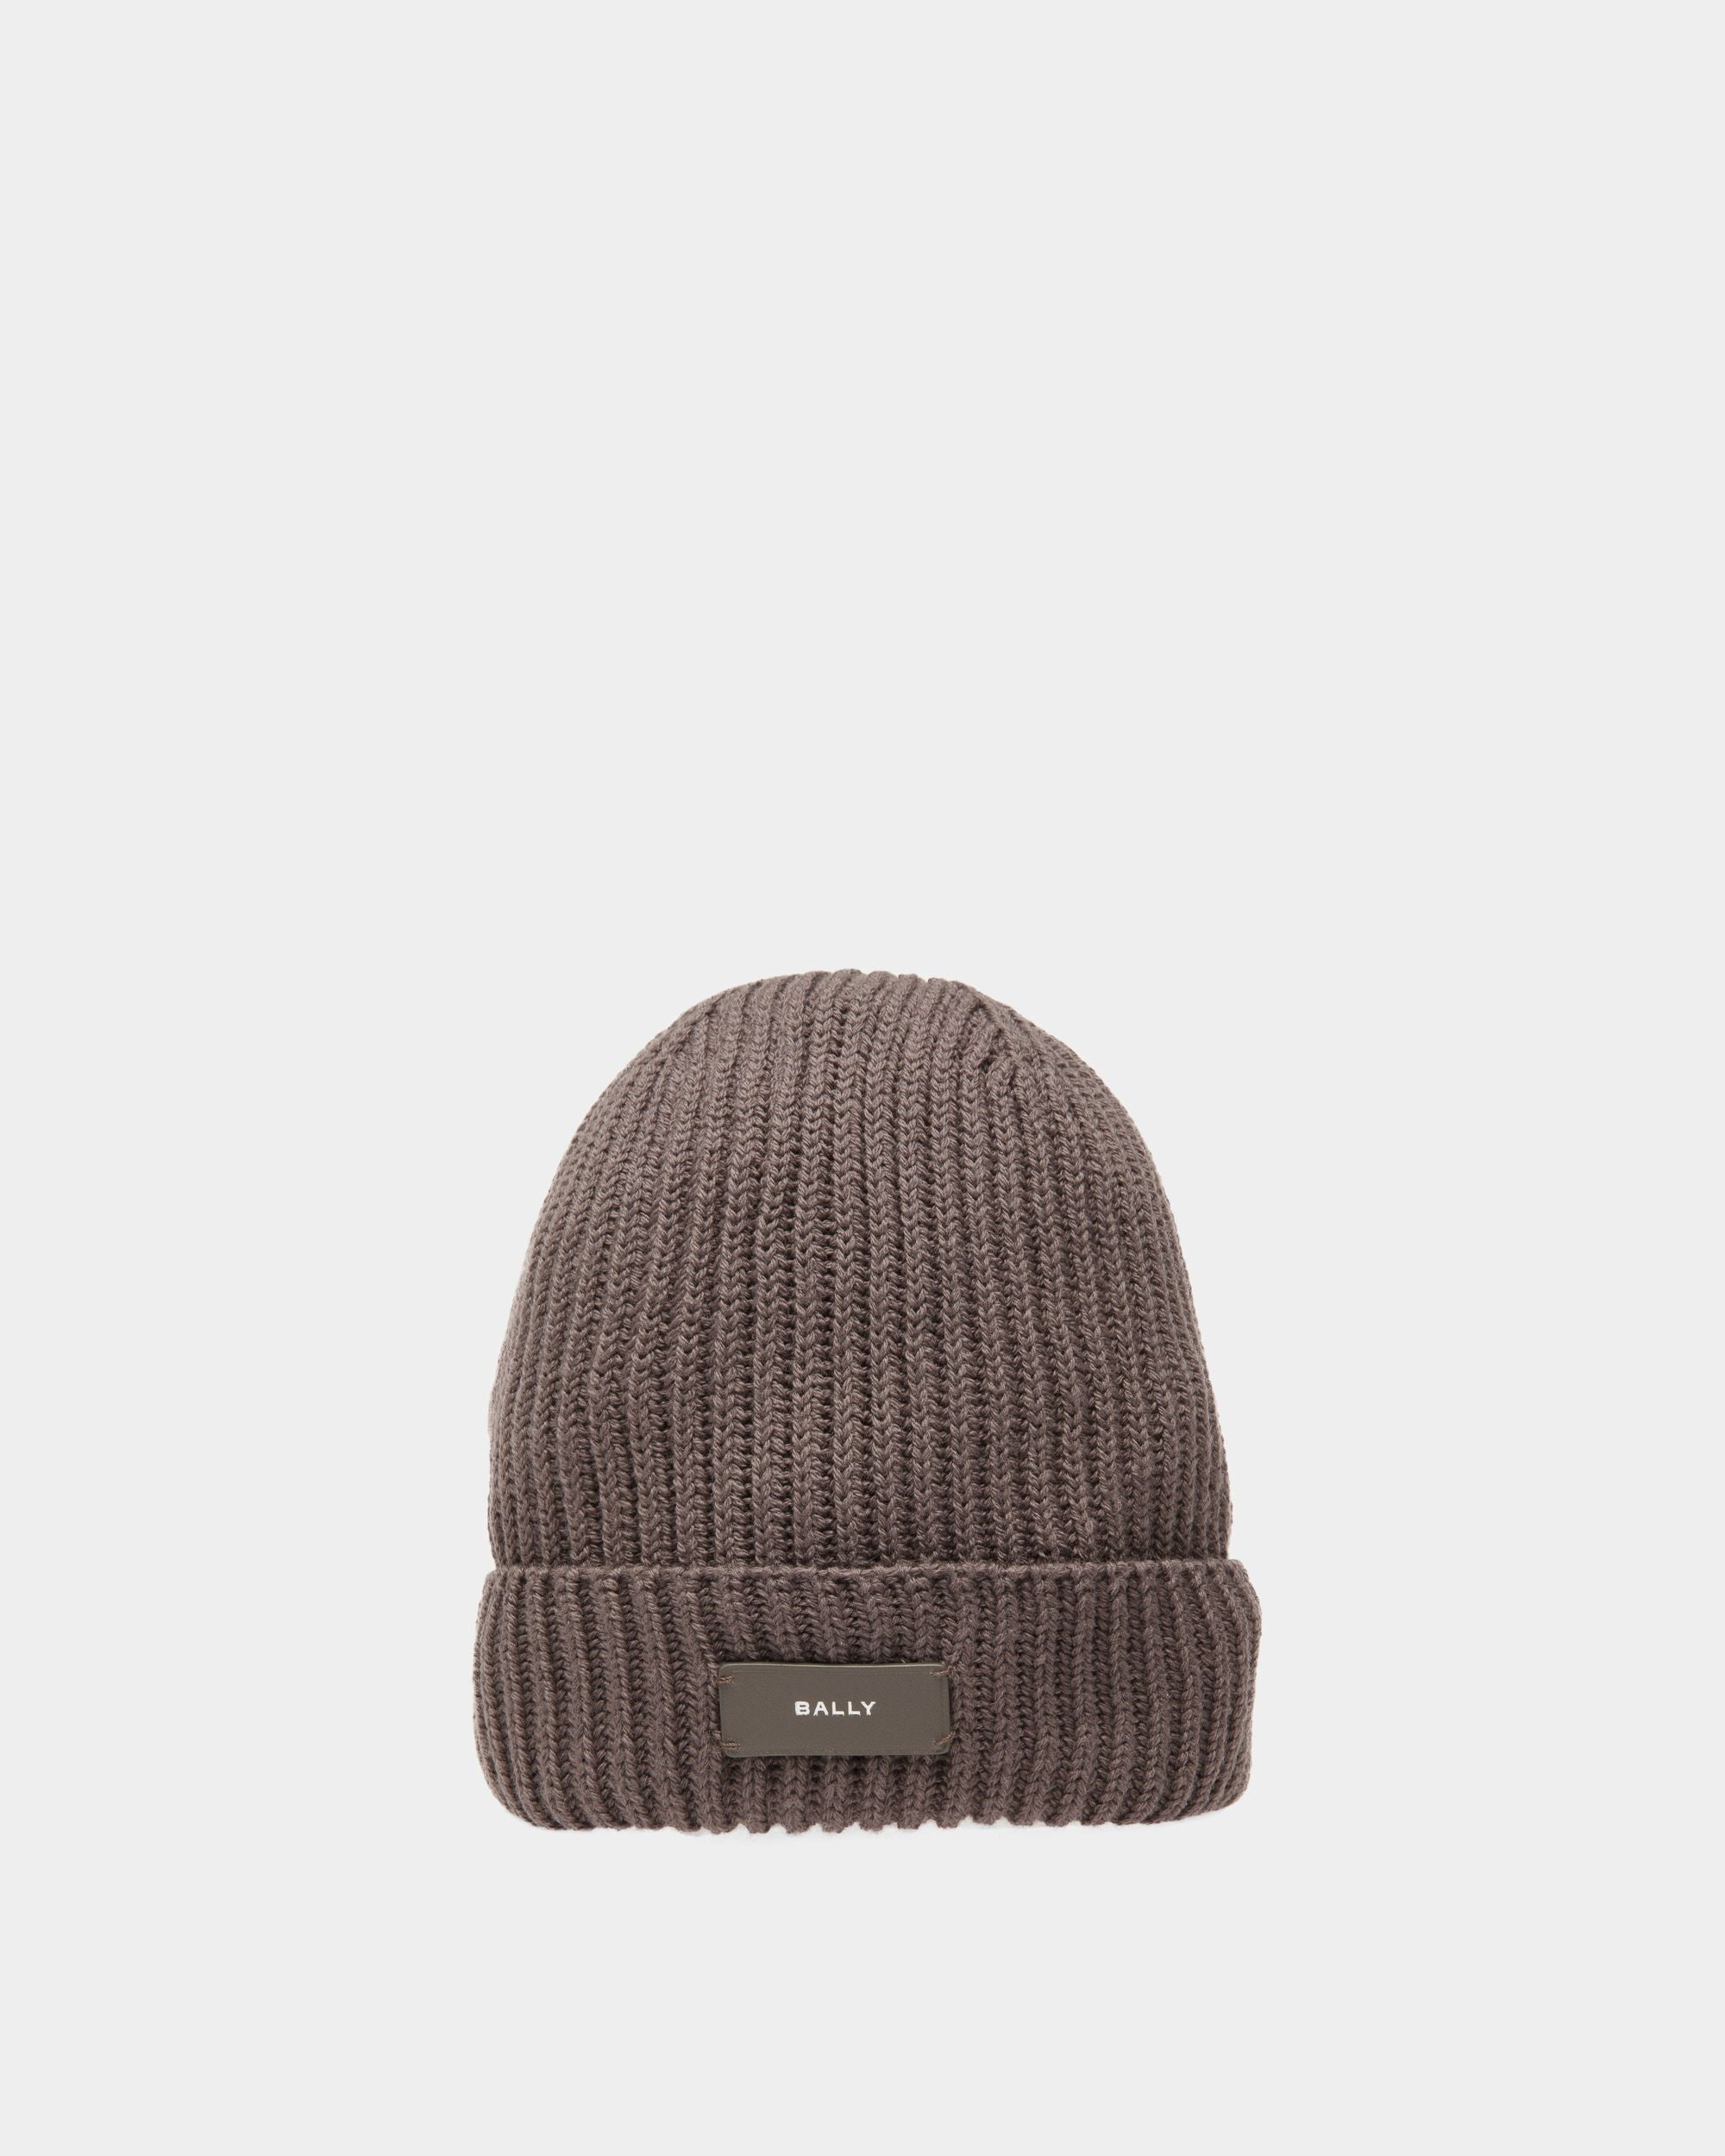 Ribbed Beanie Hat | Men's Hat | Dark Mineral Wool | Bally | Still Life Front